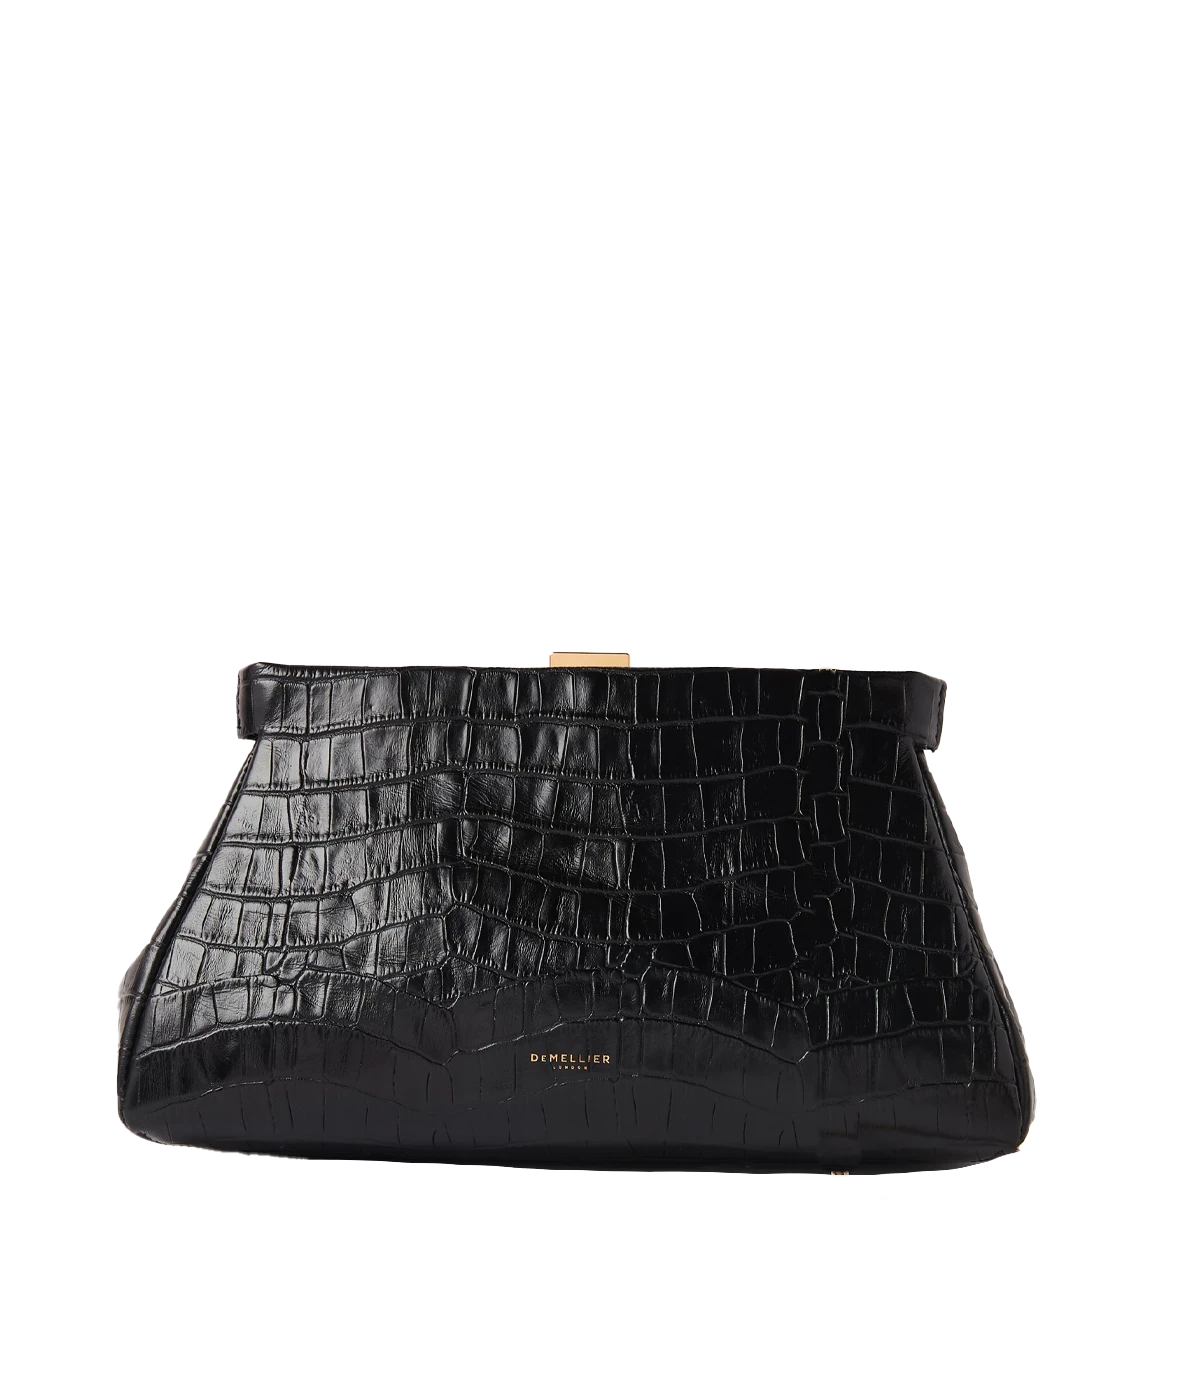 Cannes handbag in Black Croc